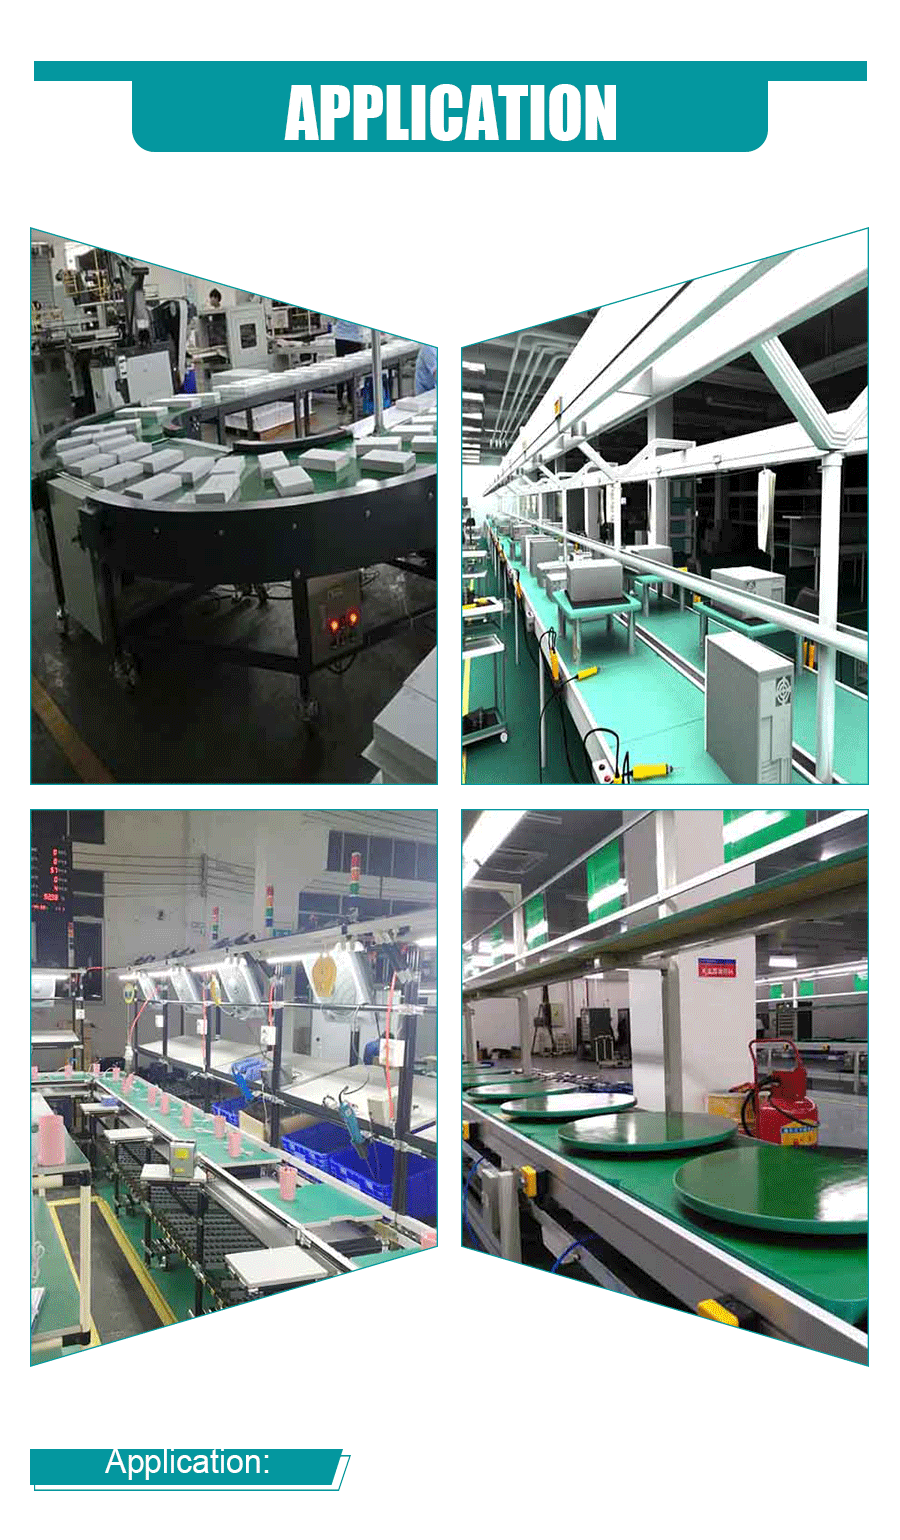 Assembly line conveyor belt